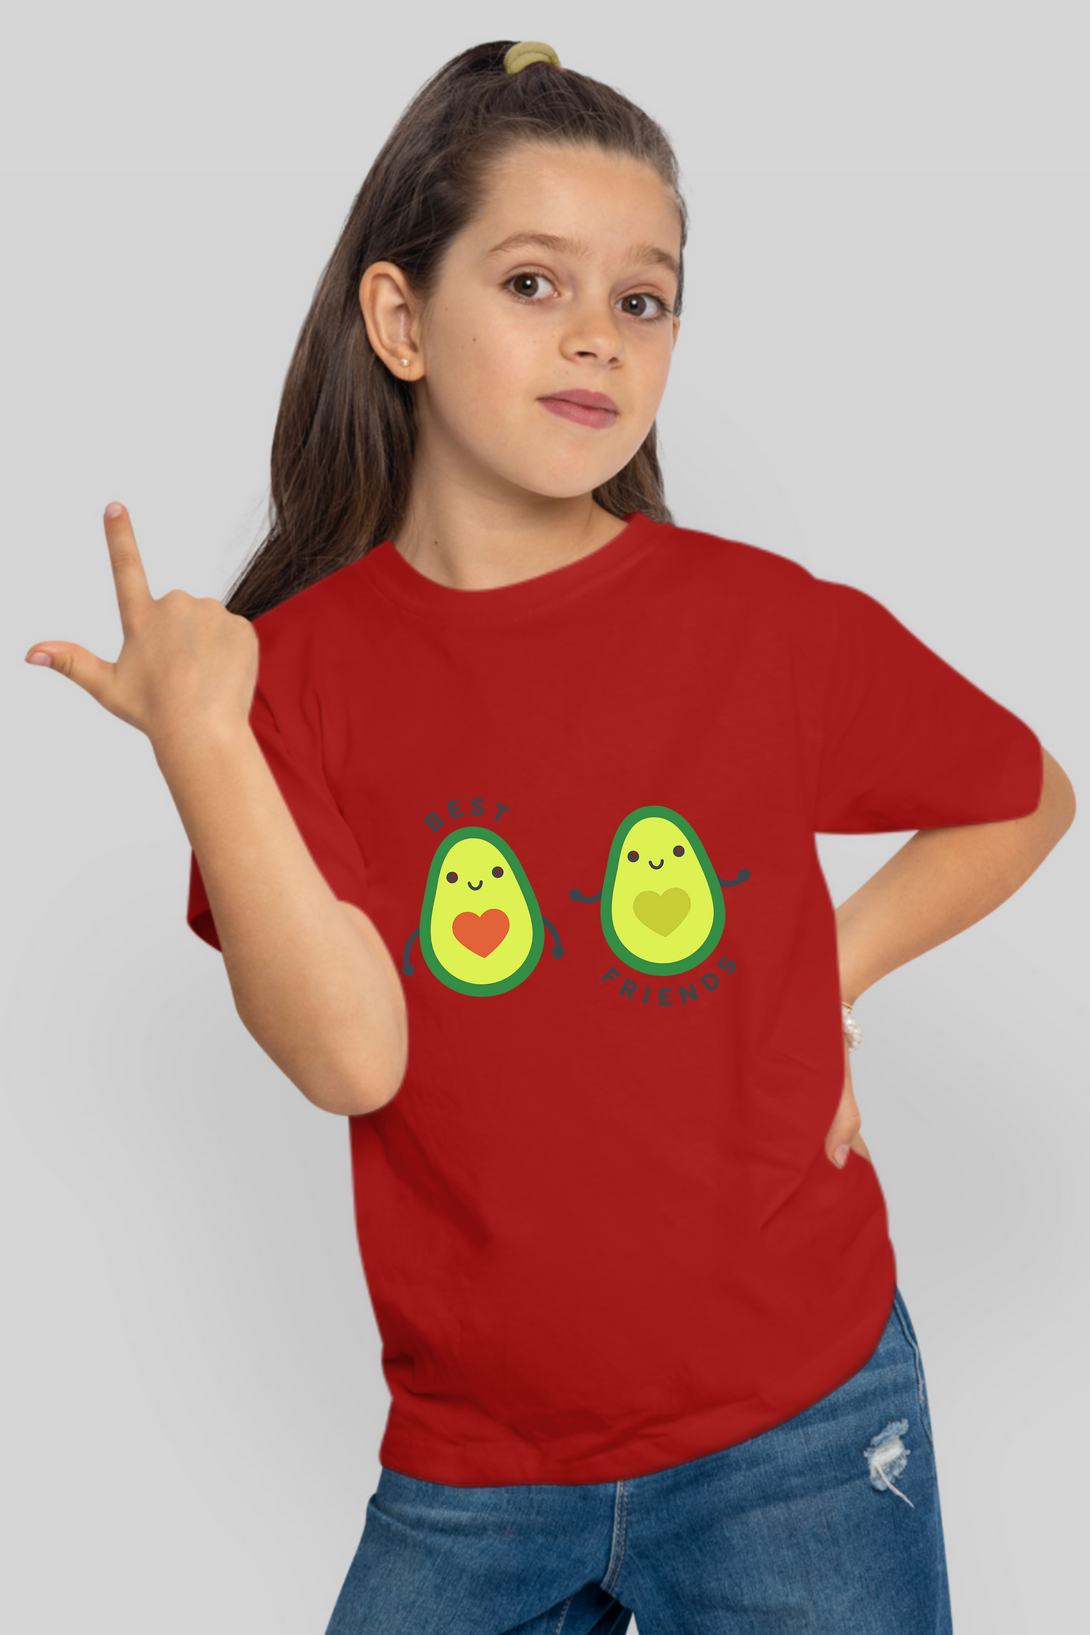 Avocado Friends Printed T-Shirt For Girl - WowWaves - 7